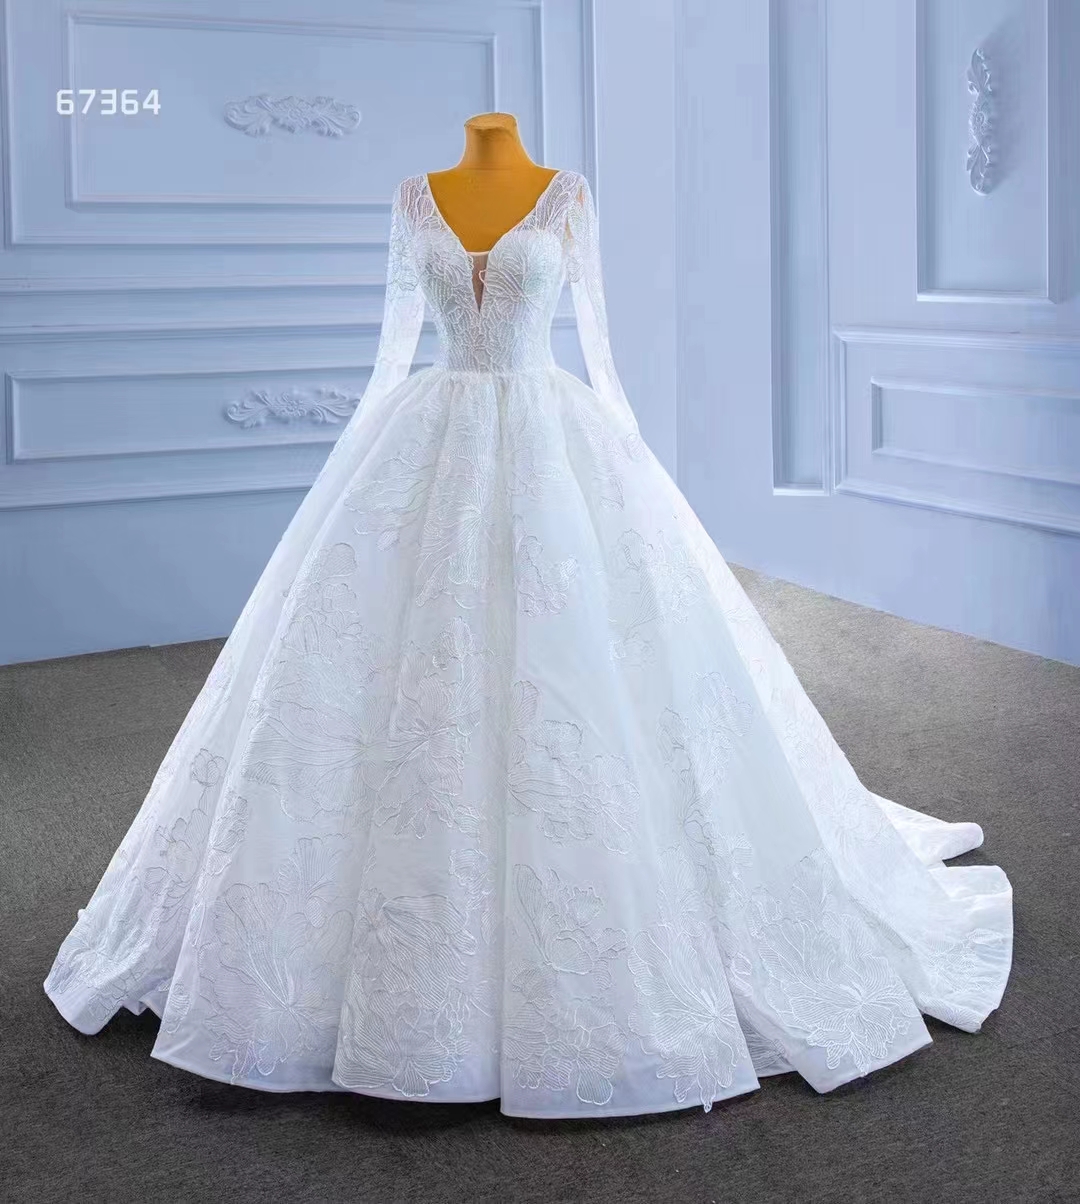 Elegant Wedding Dress Long Sleeve White Tulle Turkey Bridal Ball Gown SM67364